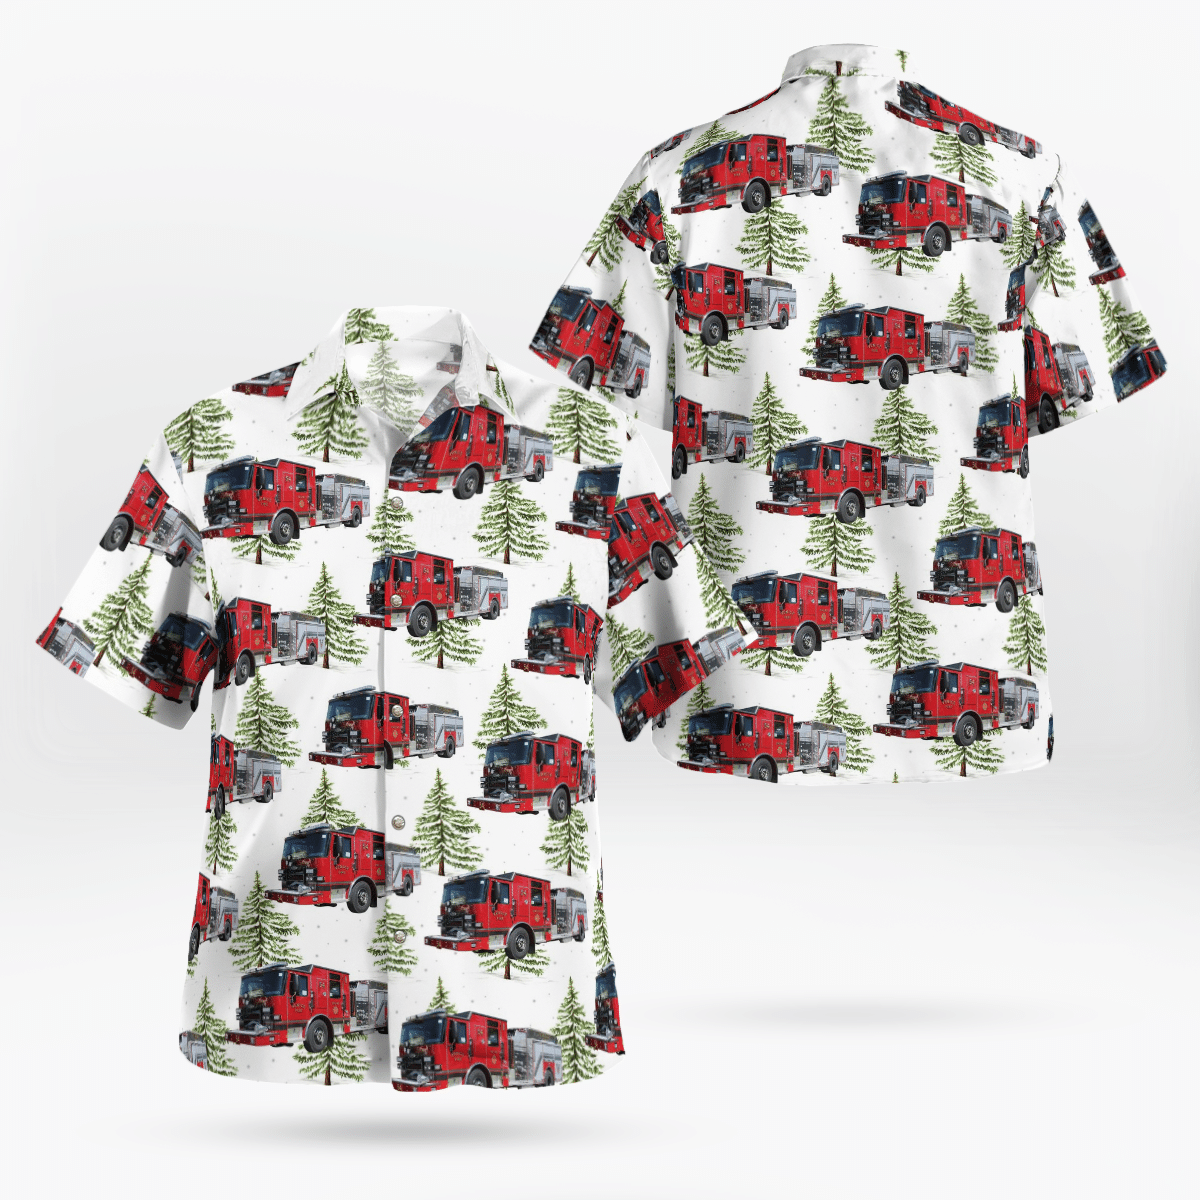 Why don't you order Hot Hawaiian Shirt today? 69